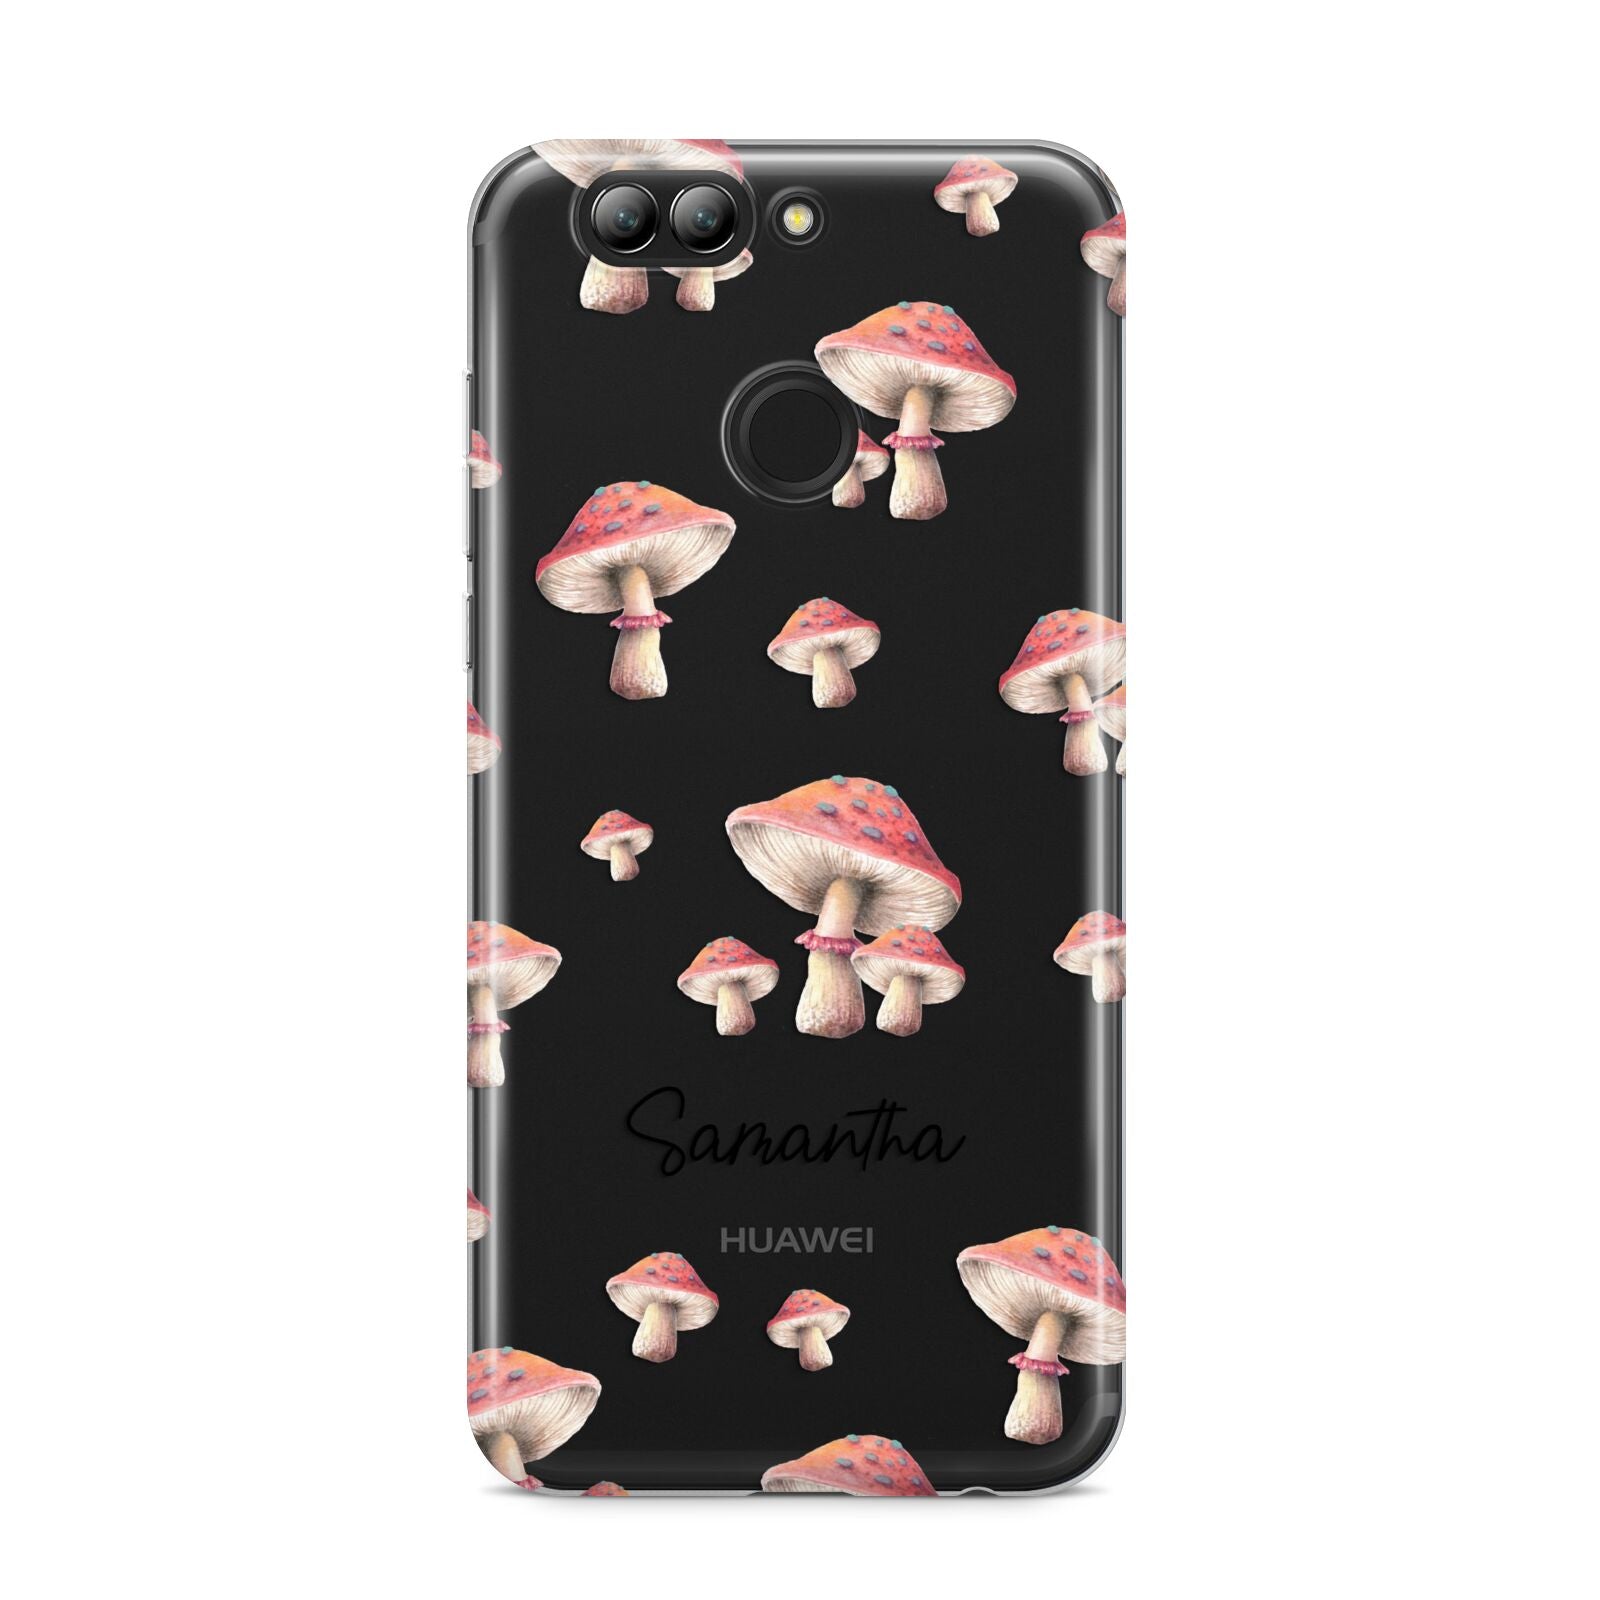 Mushroom Illustrations with Name Huawei Nova 2s Phone Case